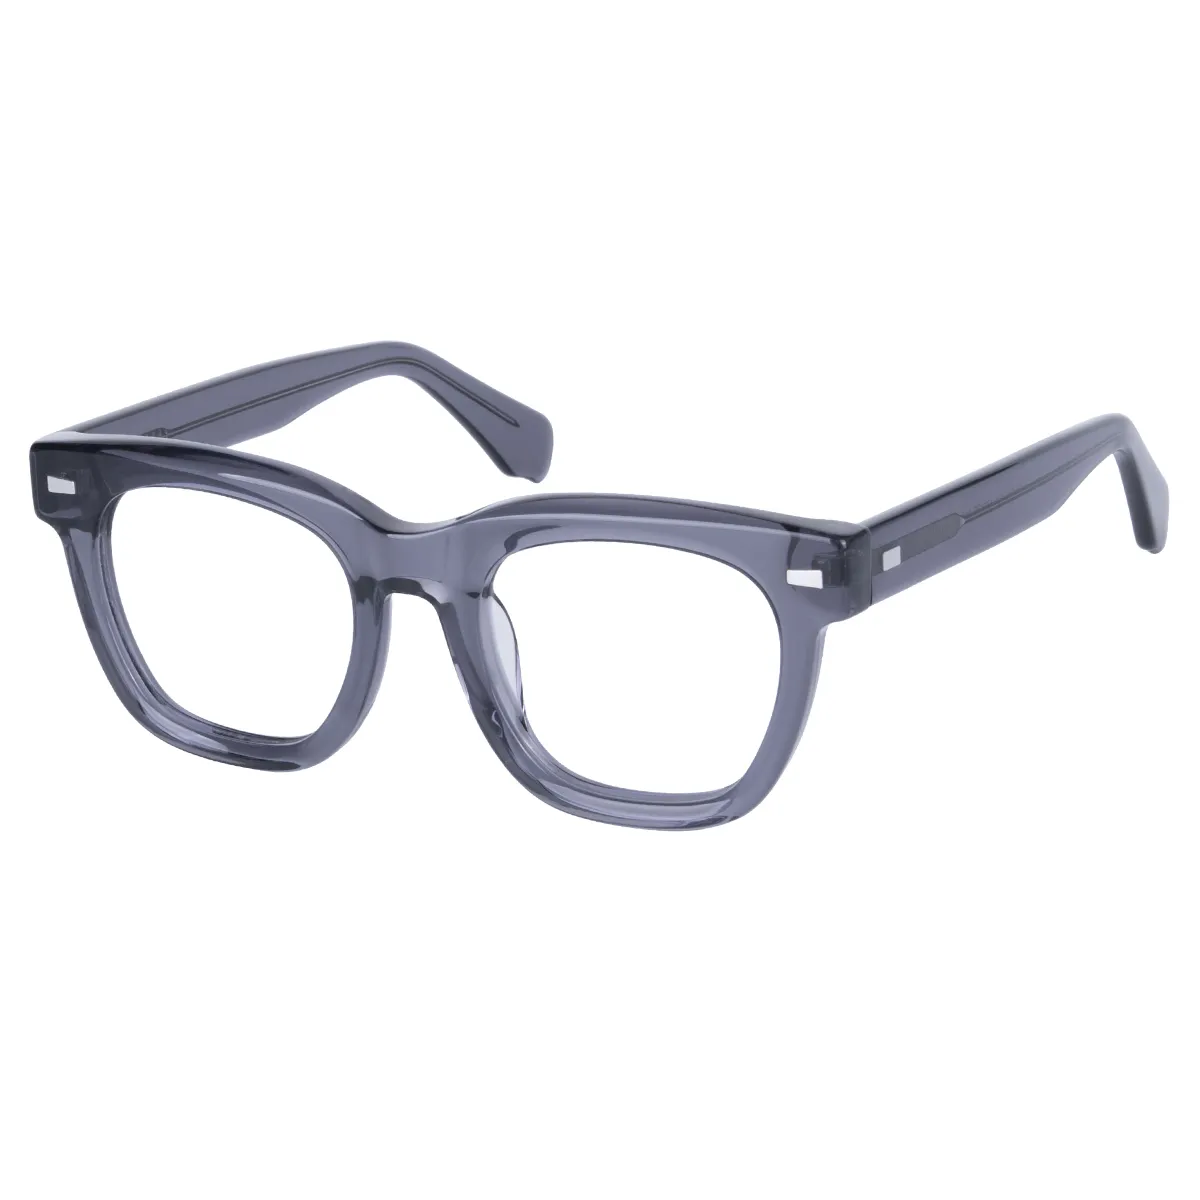 Morty - Square Gray Glasses for Women